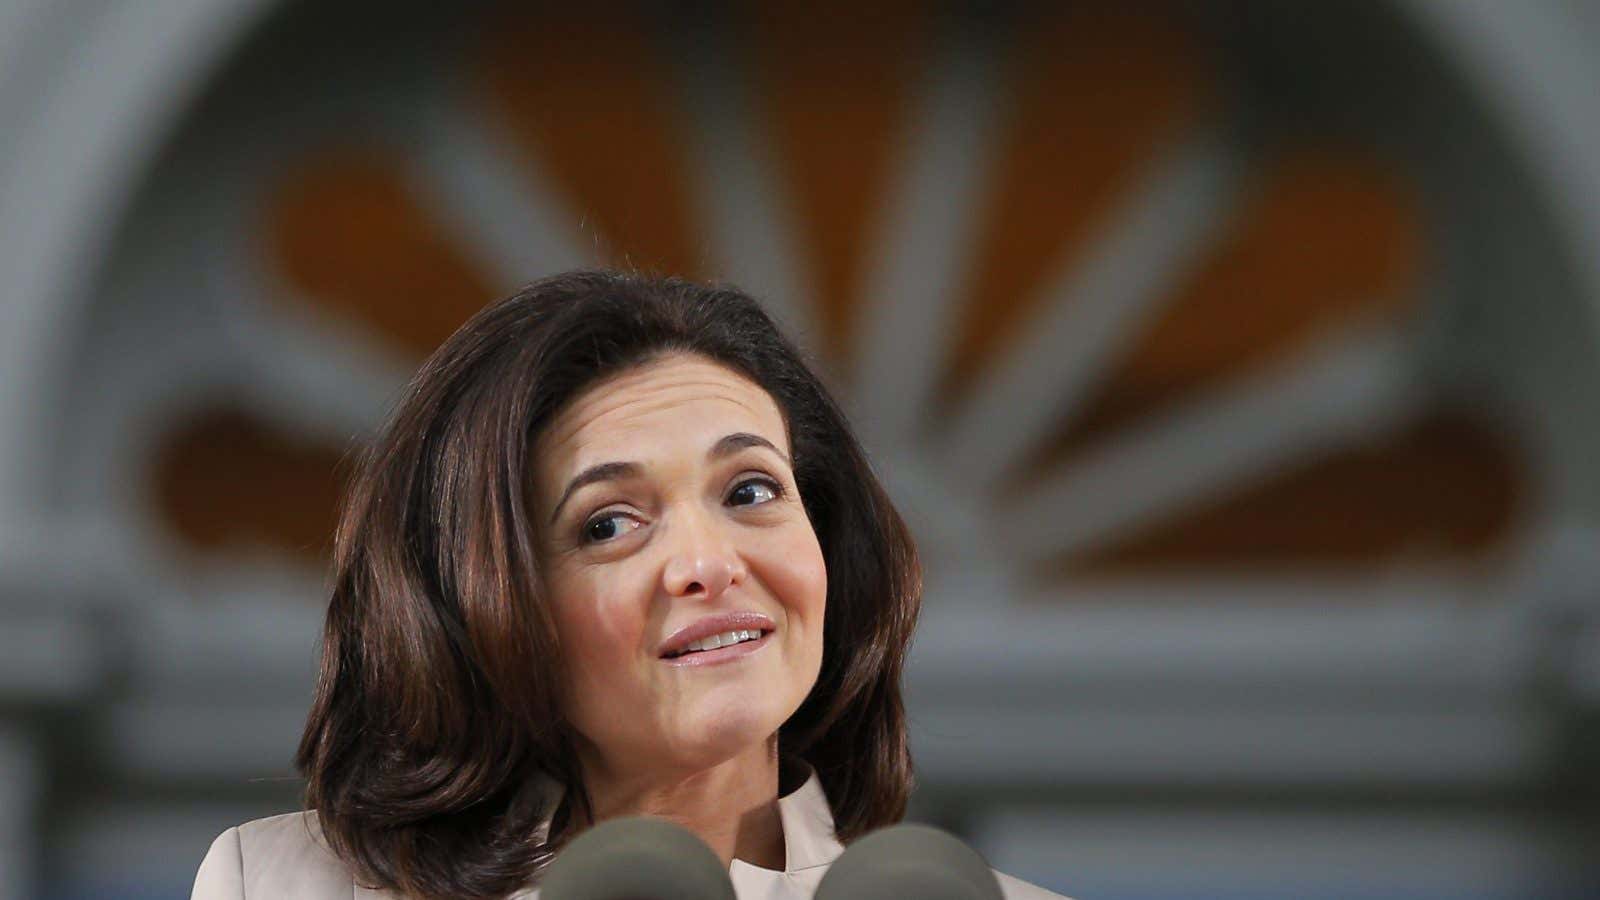 Sheryl Sandberg is not amused.